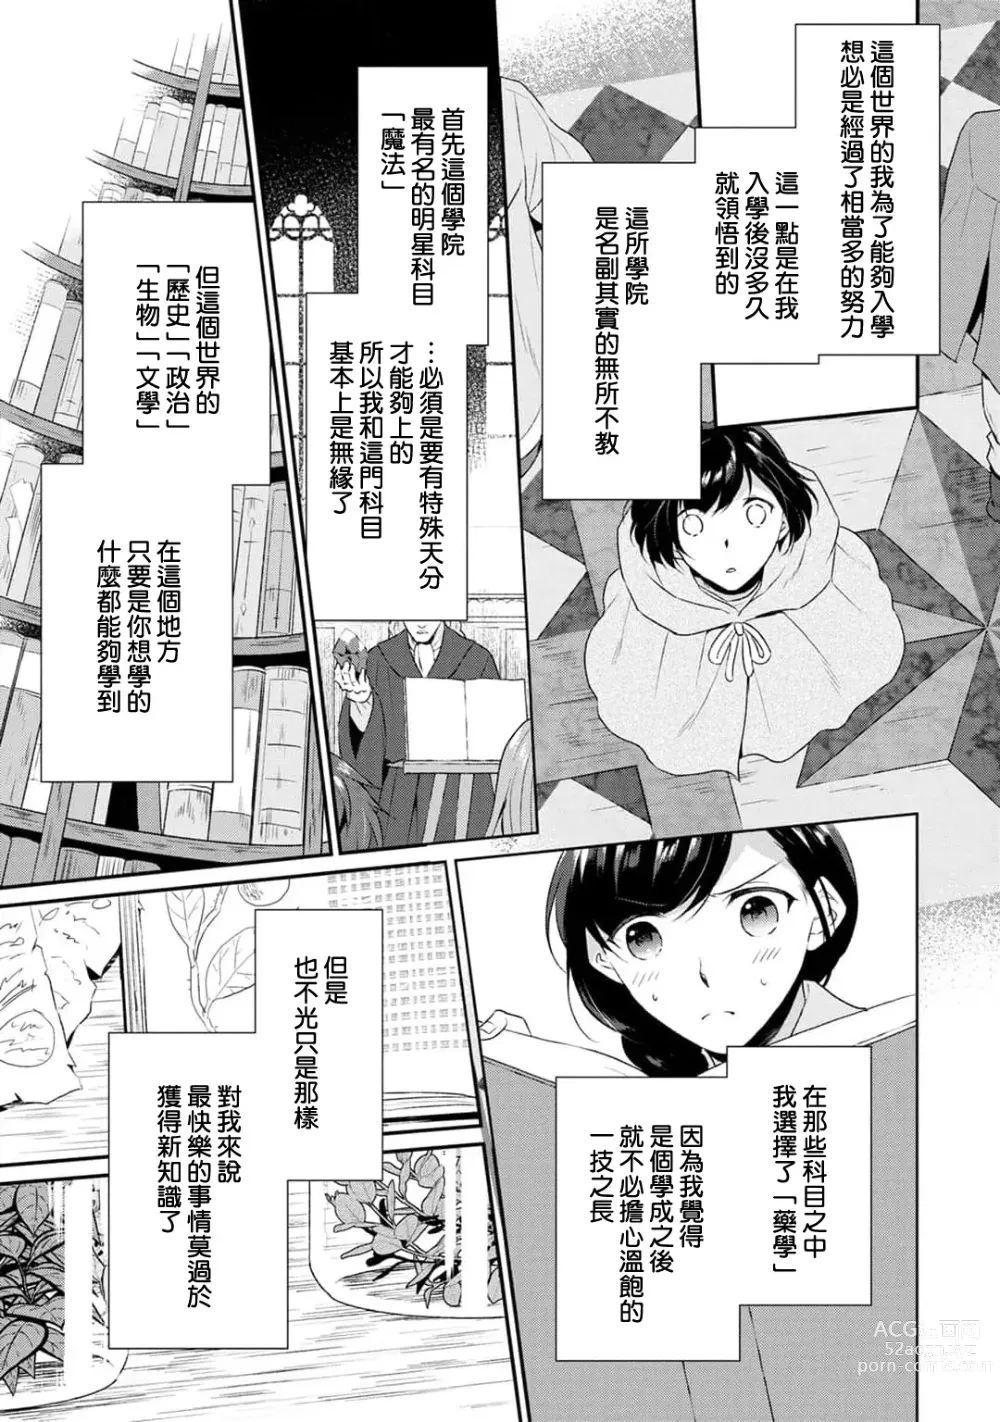 Page 11 of manga 转生魔女被魔龙金屋藏娇了 1-11 end